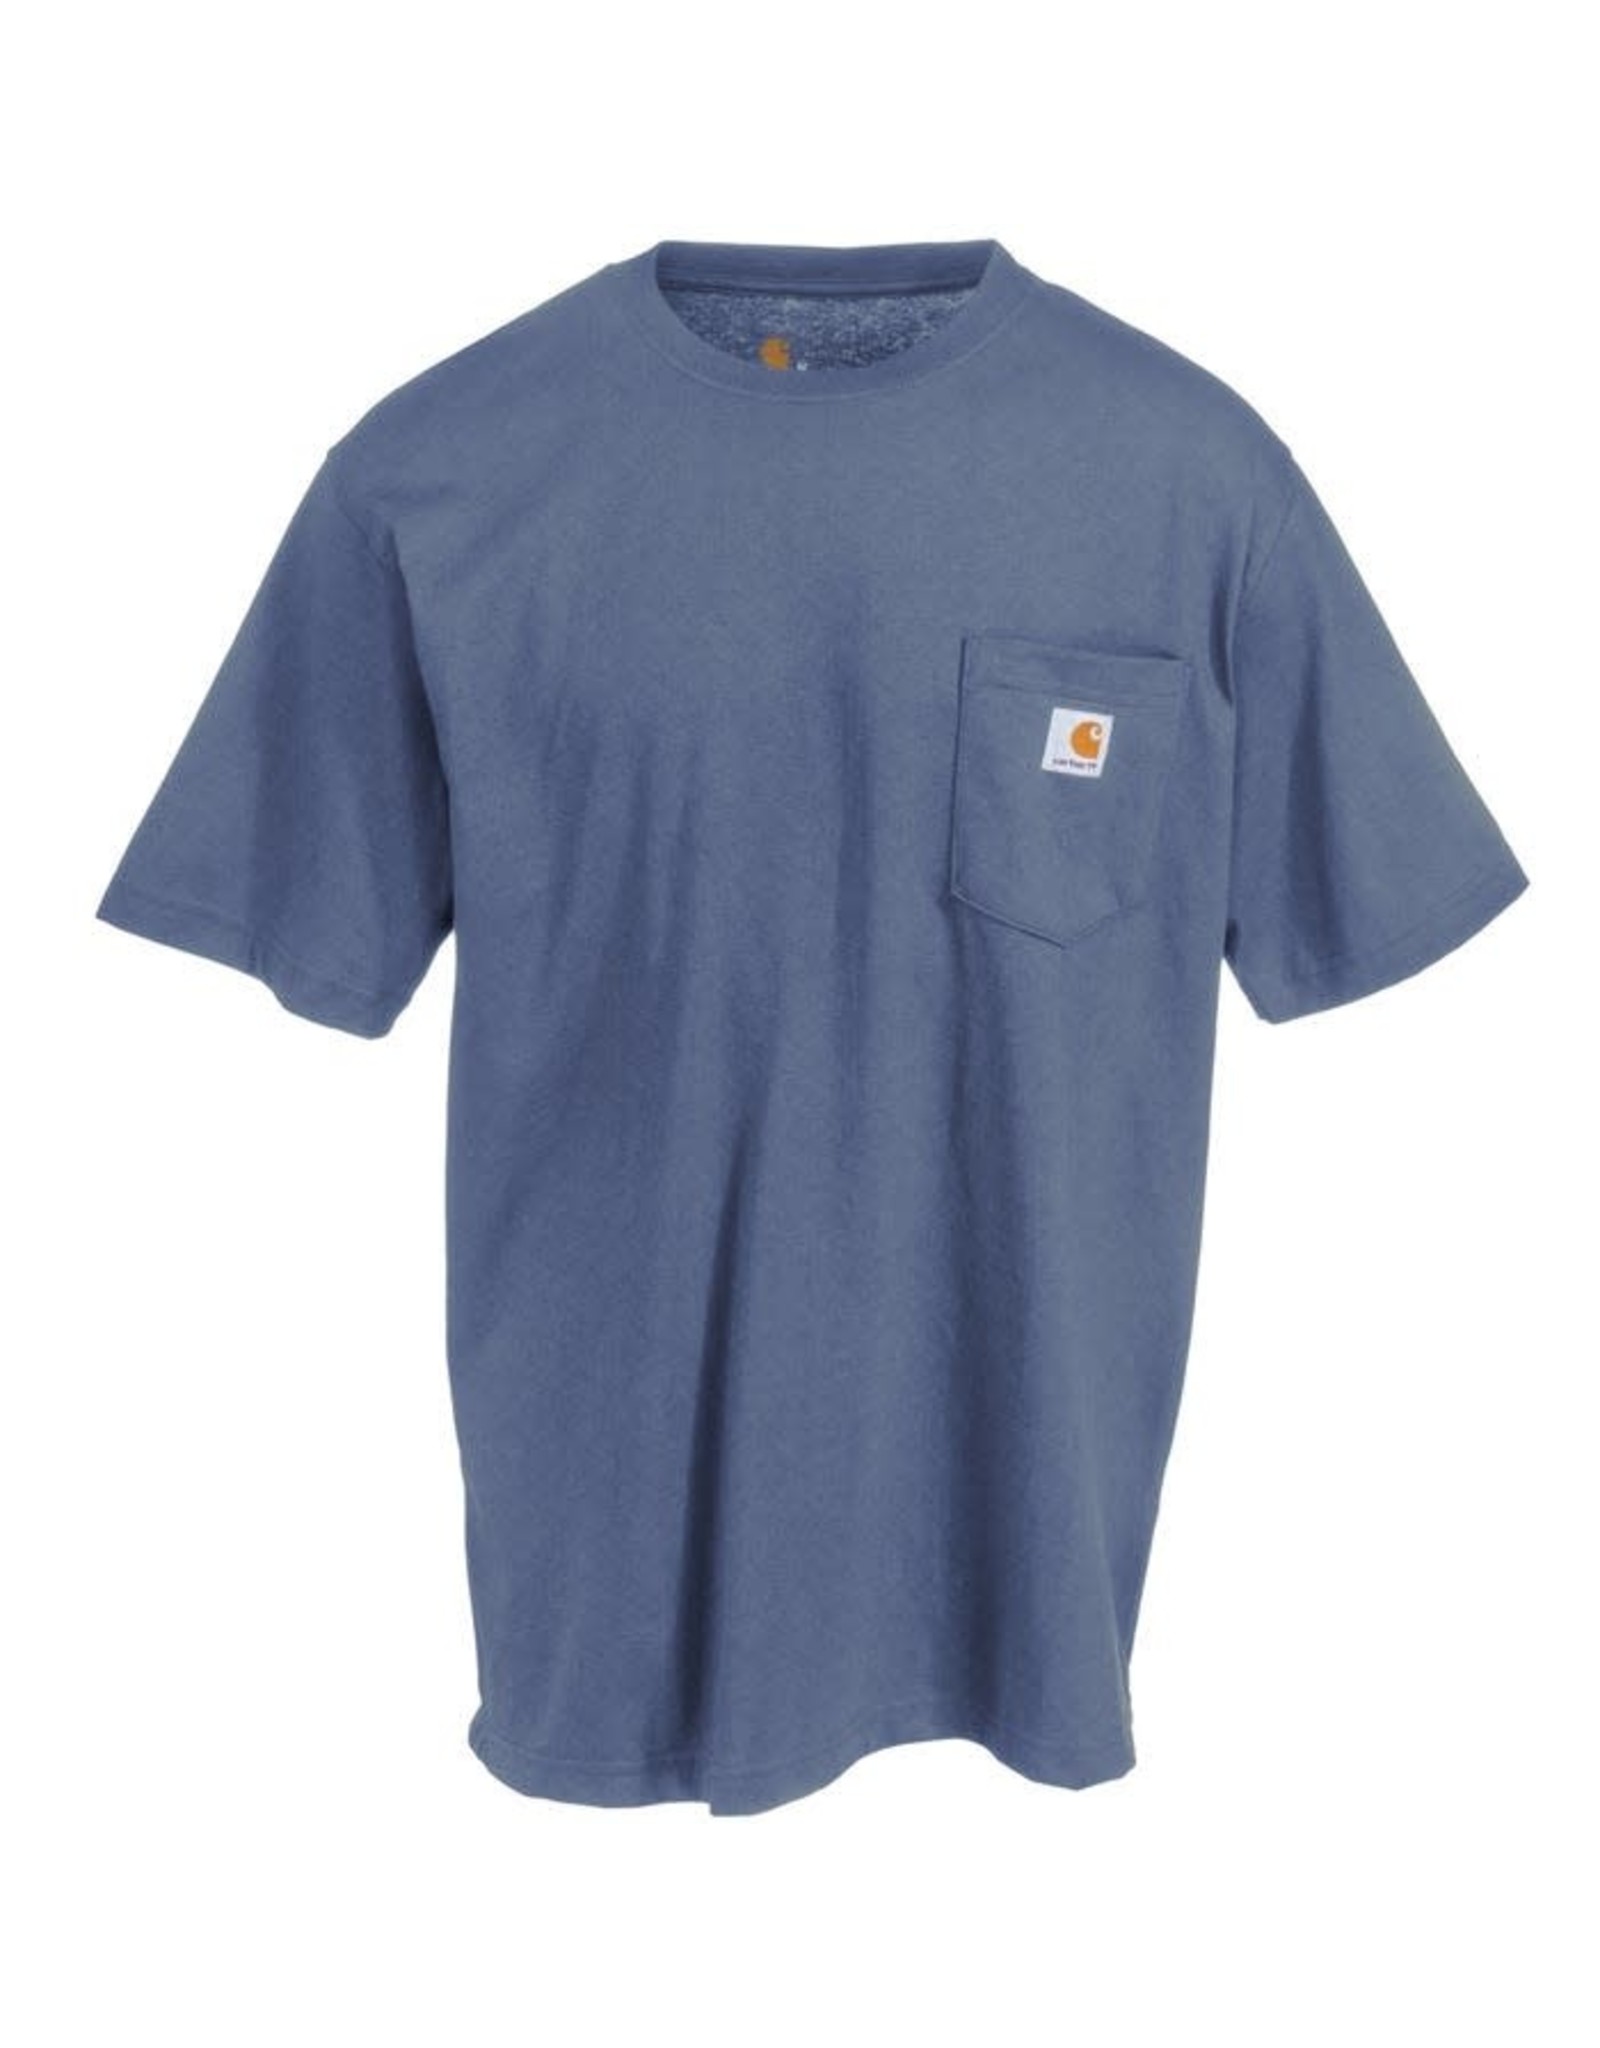 Carhartt Mens SS K87-BLS Bluestone Short Sleeve T-Shirt